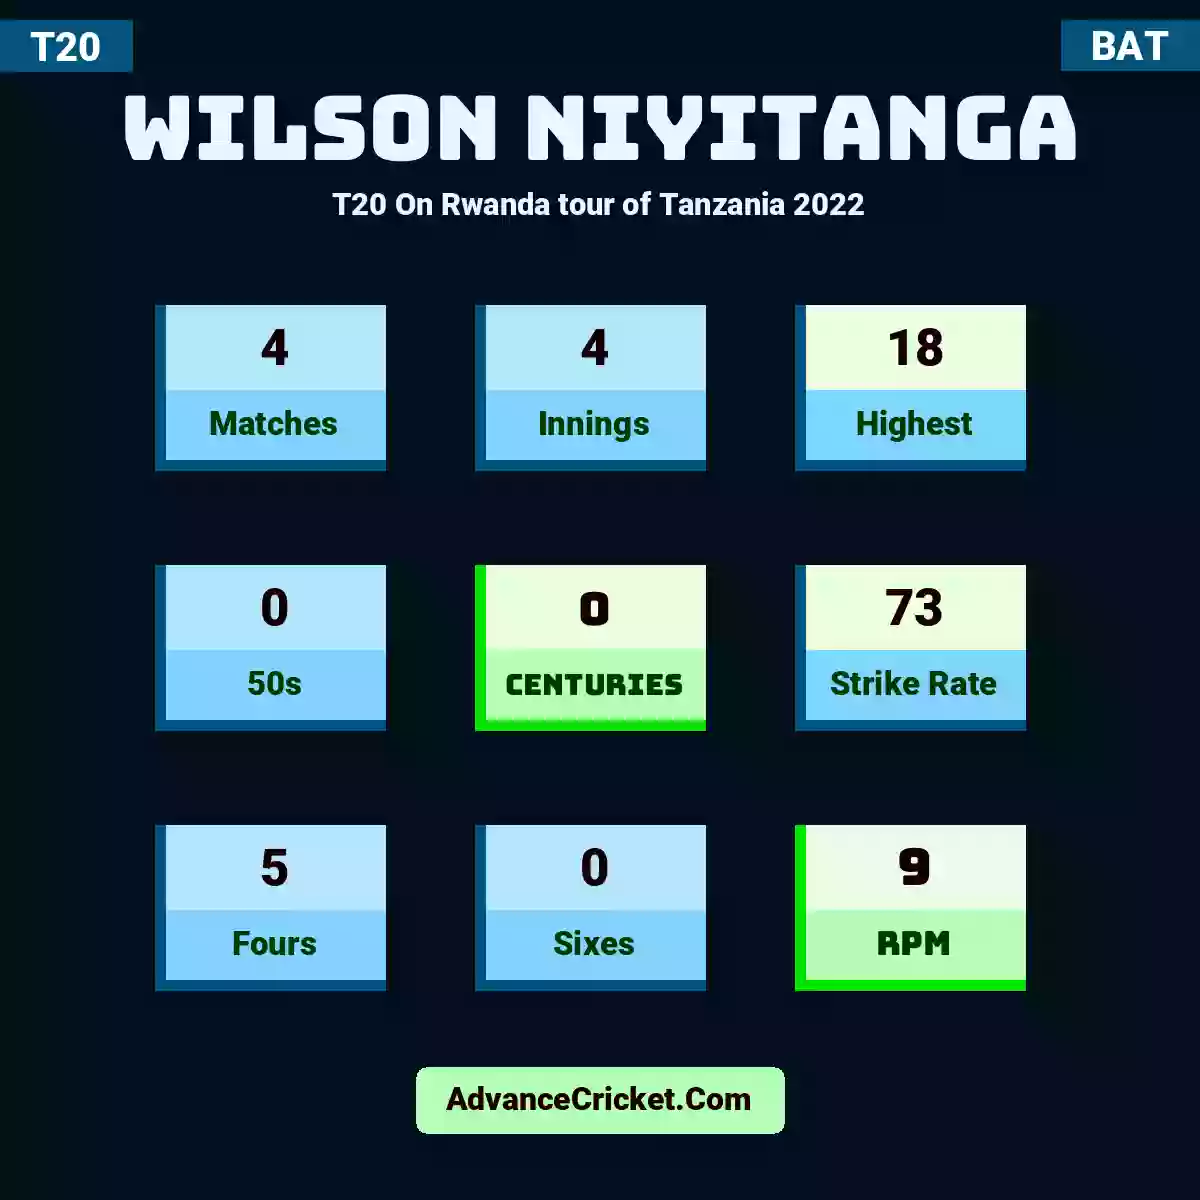 Wilson Niyitanga T20  On Rwanda tour of Tanzania 2022, Wilson Niyitanga played 4 matches, scored 18 runs as highest, 0 half-centuries, and 0 centuries, with a strike rate of 73. W.Niyitanga hit 5 fours and 0 sixes, with an RPM of 9.